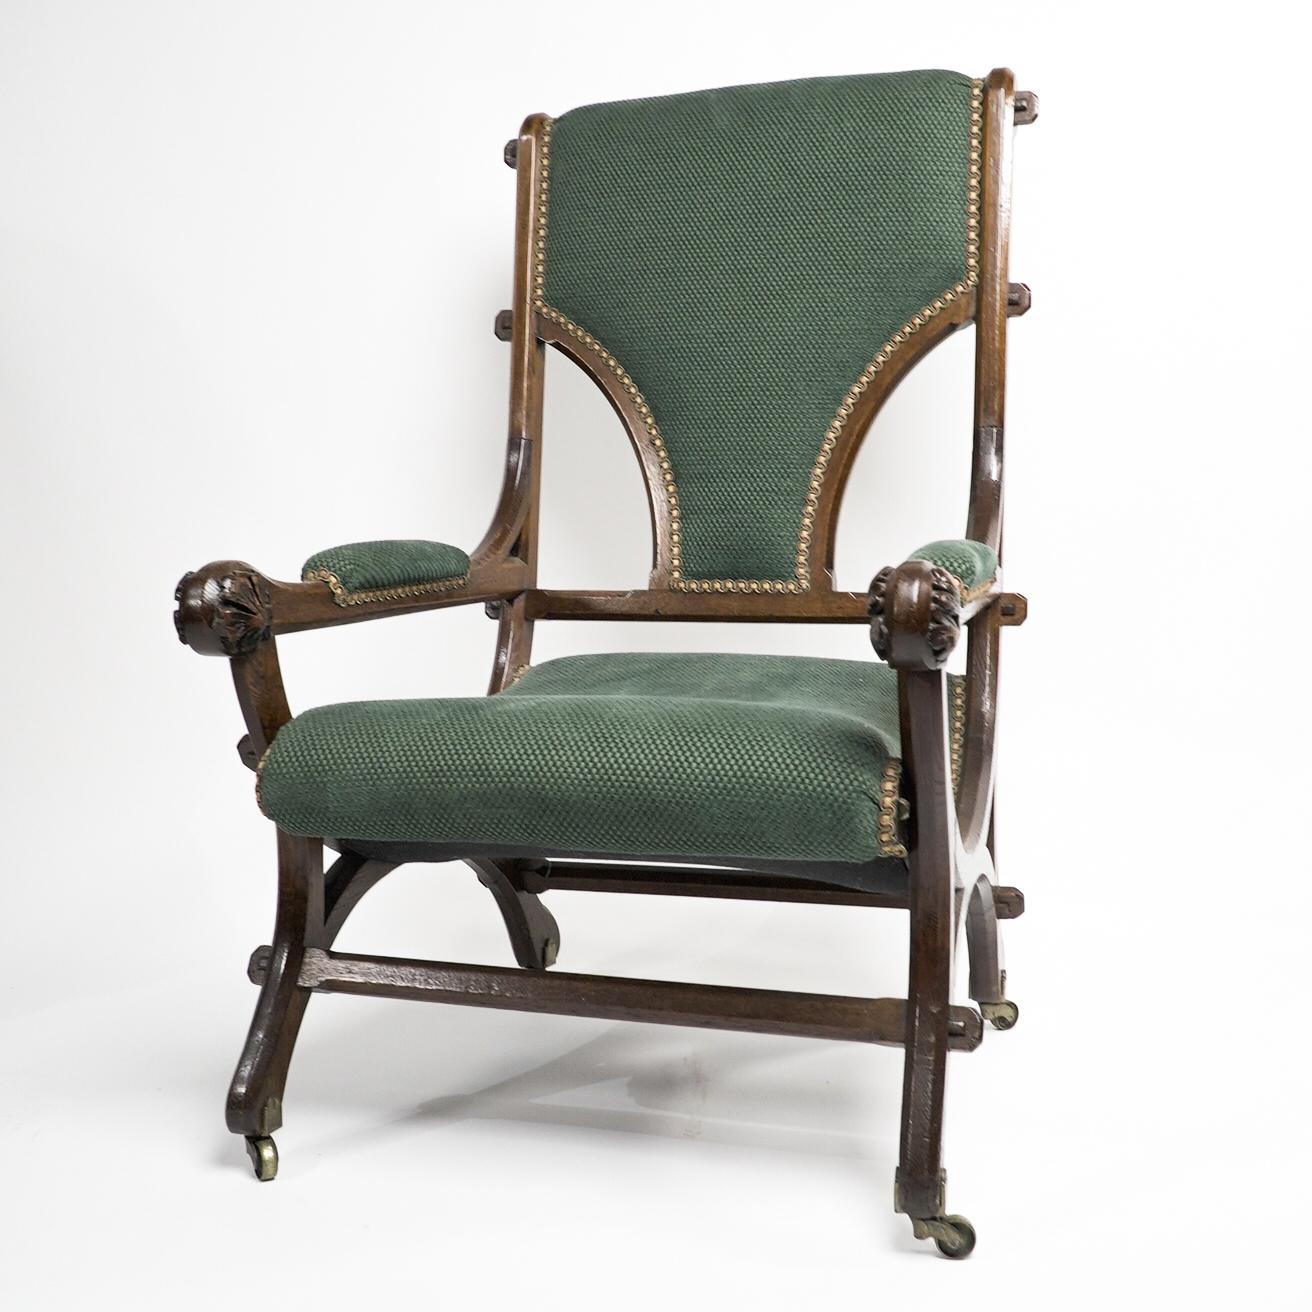 English John Pollard Seddon Gothic Revival oak armchair with through pegged tenon joints For Sale